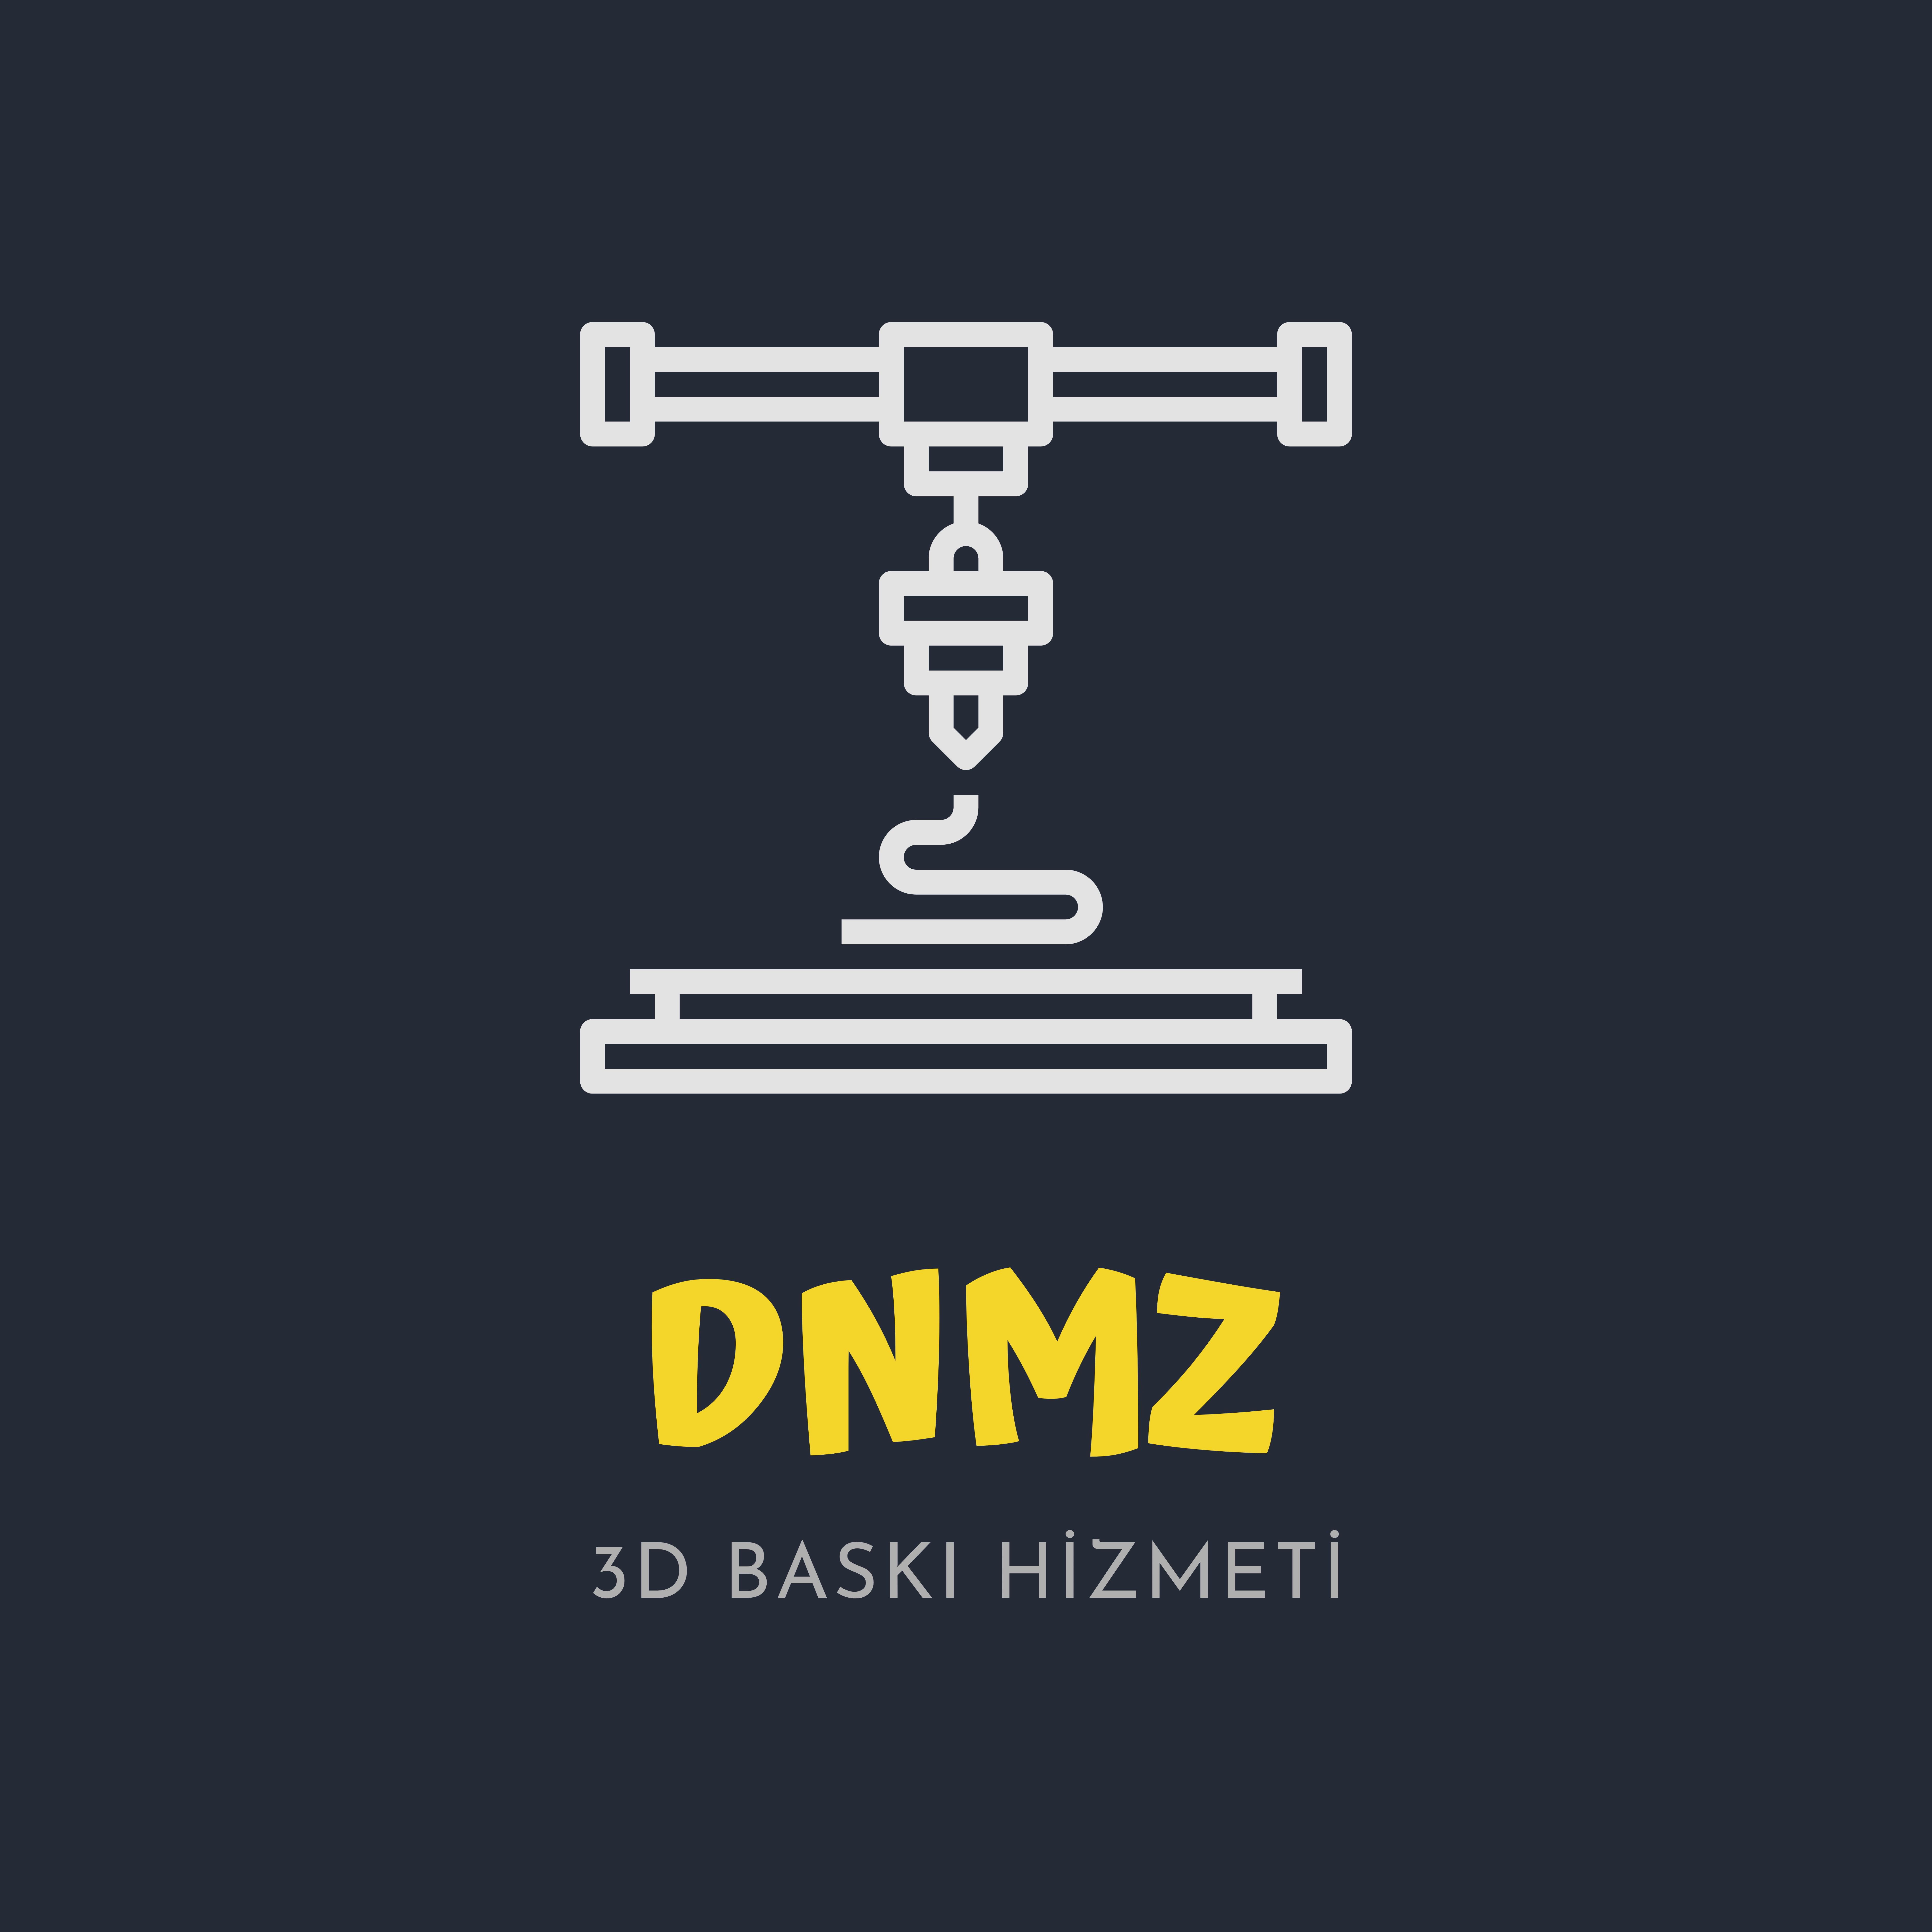 DNMZ 3D Baskı Hizmeti Logo